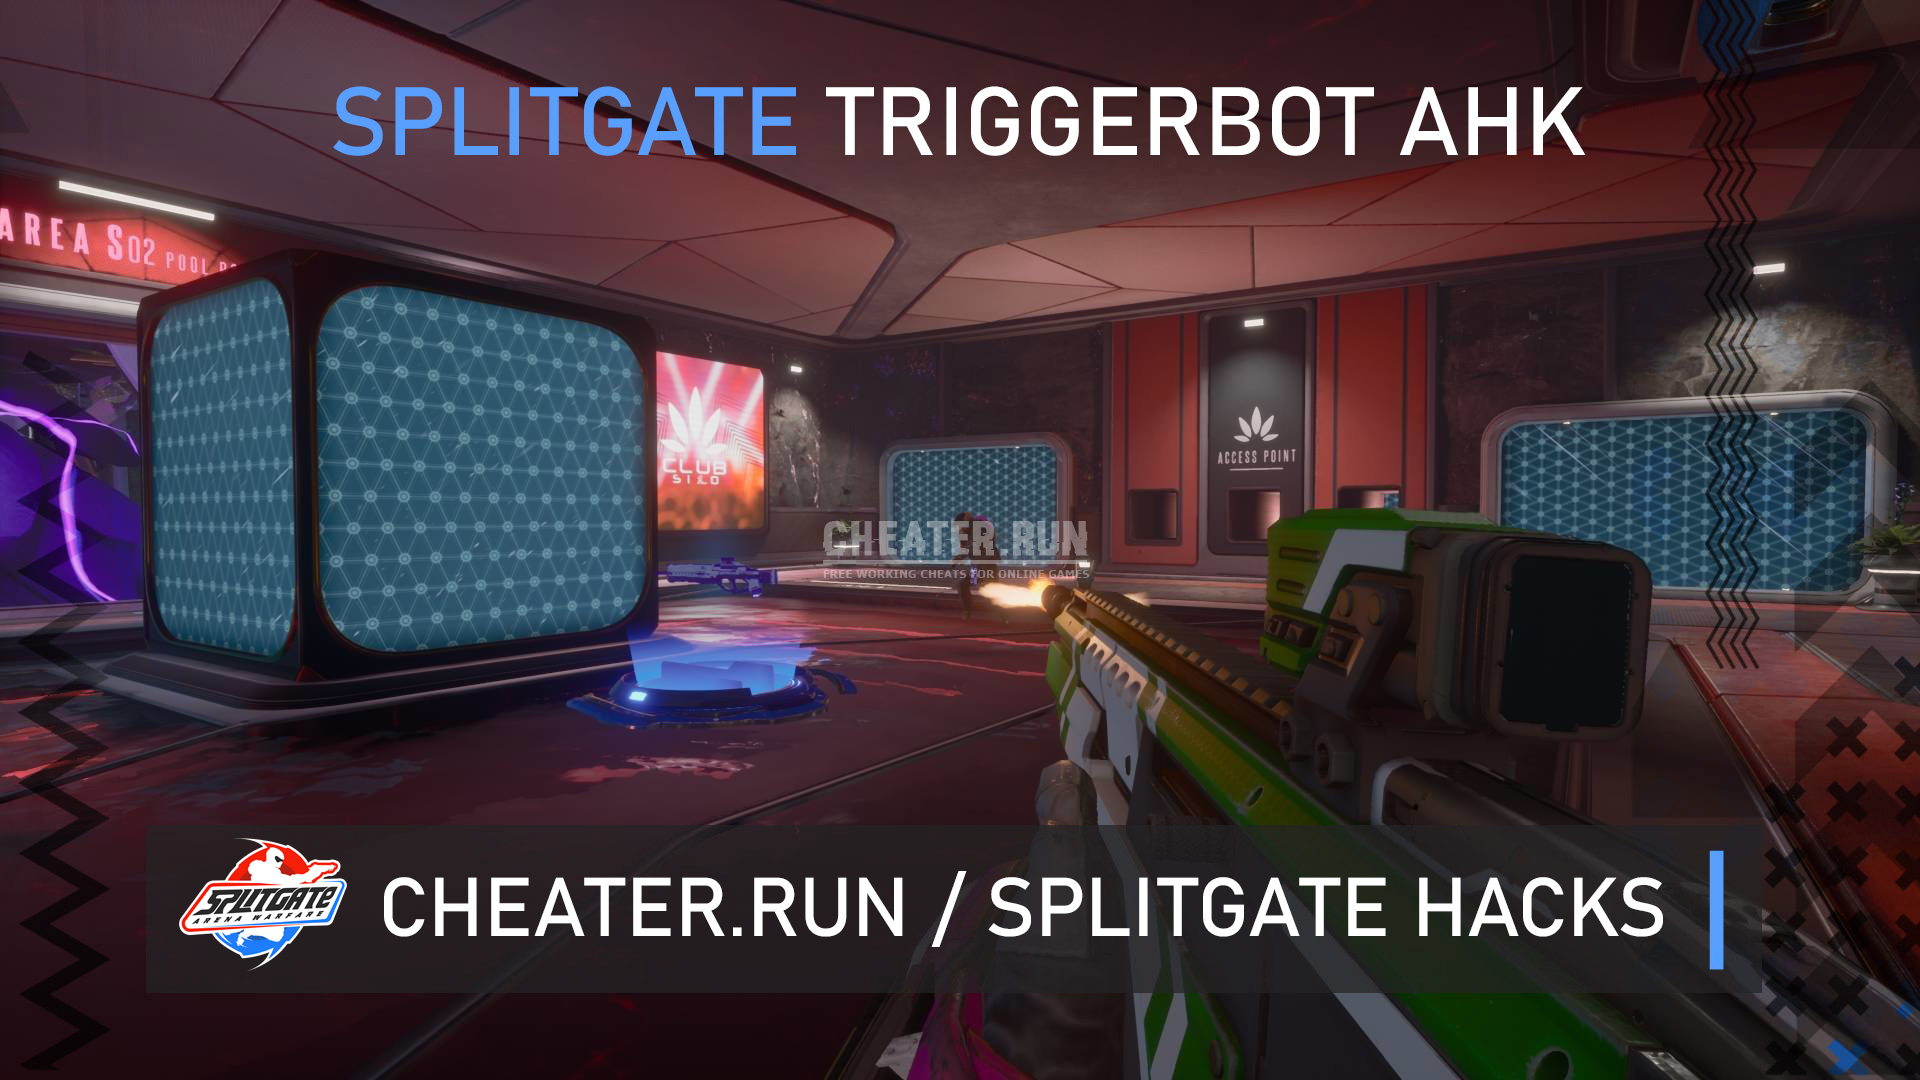 Splitgate (Beta) - TriggerBot Hack (AHK)